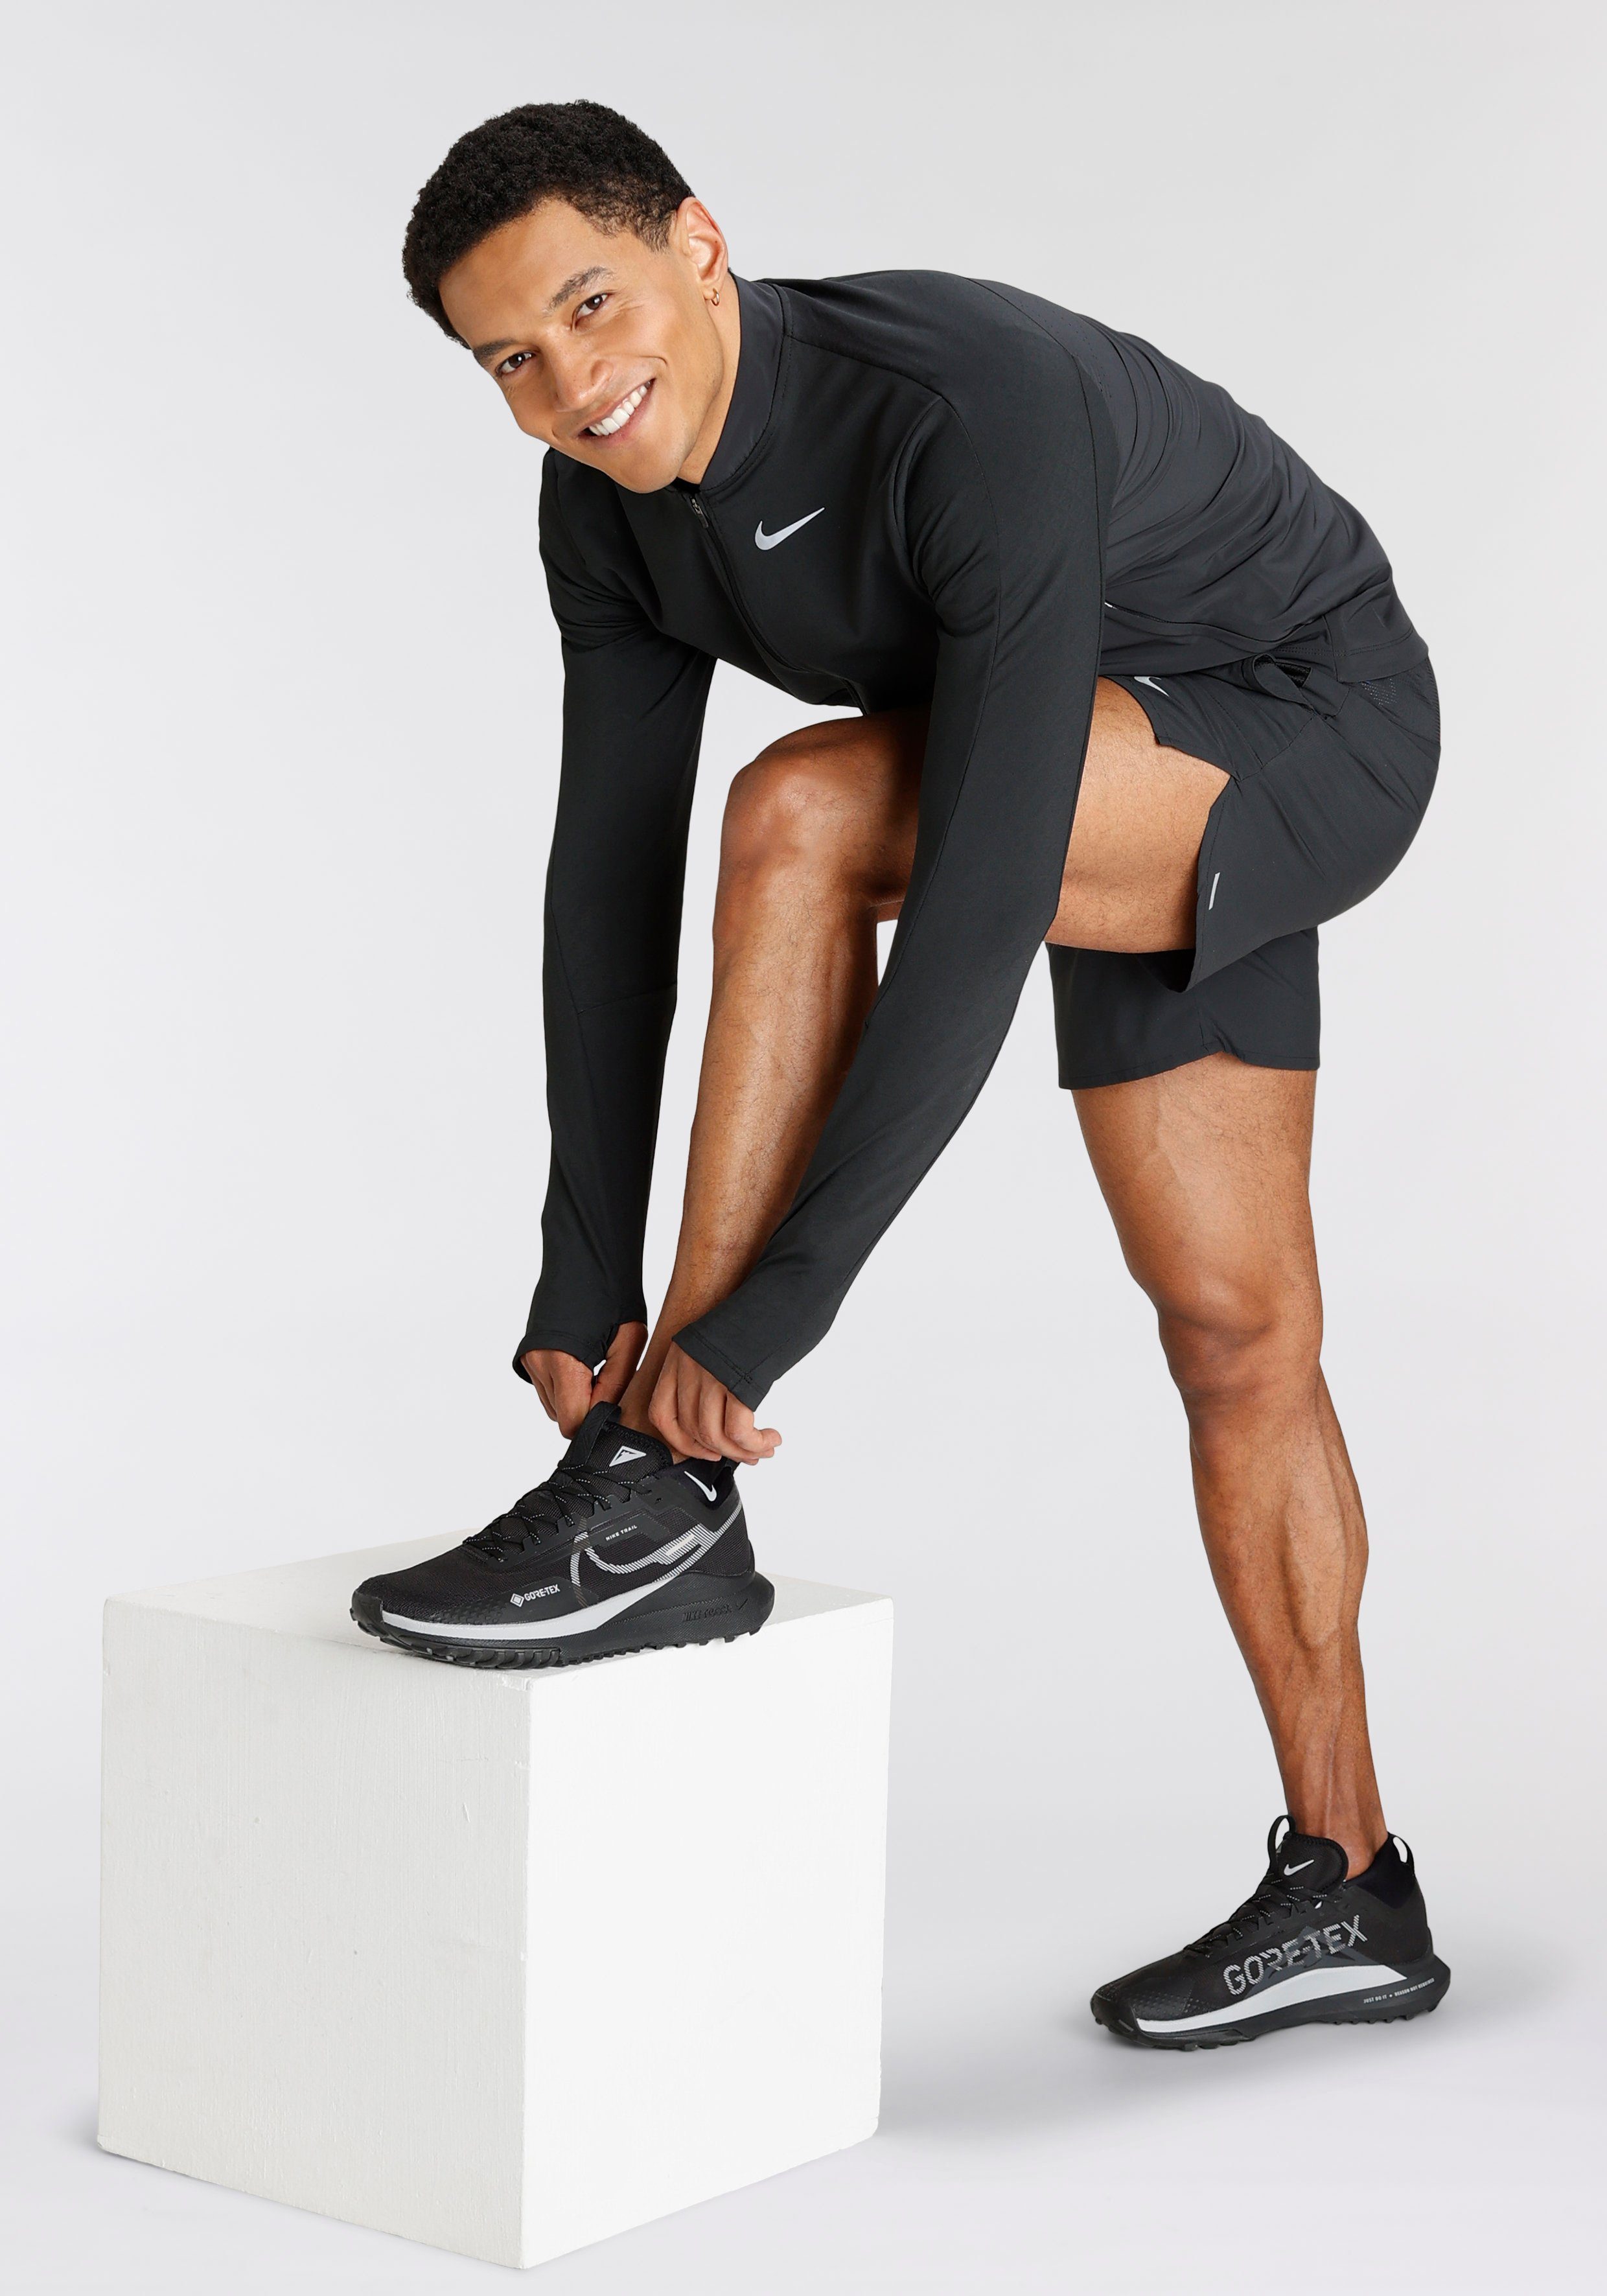 4 PEGASUS WATERPROO BLACK-WOLF-GREY-REFLECT-SILVER wasserdicht Nike GORE-TEX TRAIL Laufschuh